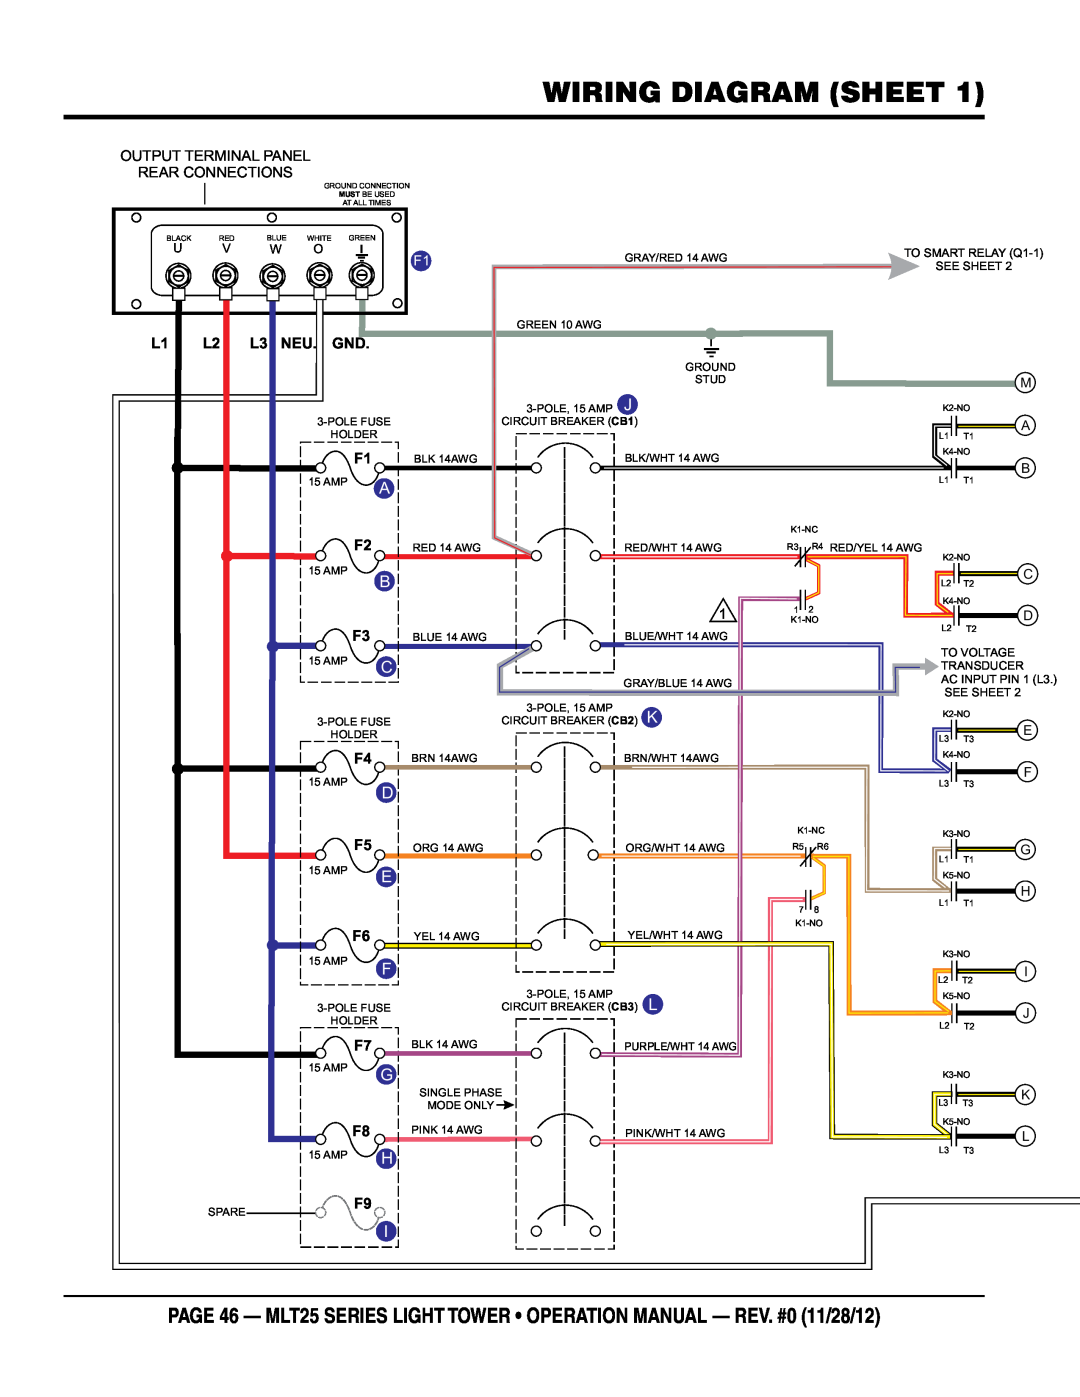 Multiquip MLT25 operation manual wiring diagram sheet 